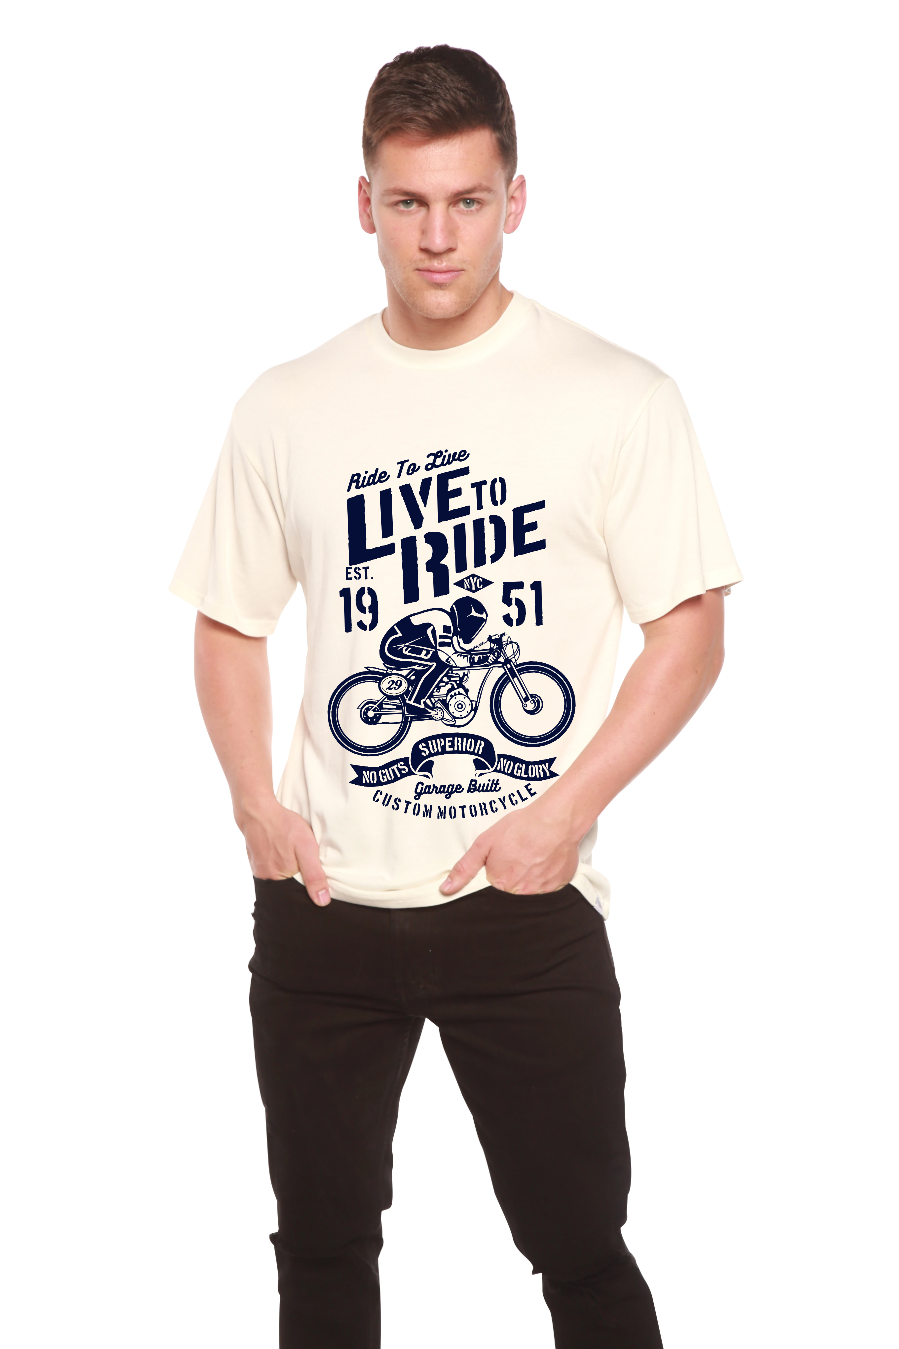 Live To Ride Men's Bamboo Viscose/Organic Cotton Short Sleeve T-Shirt - Spun Bamboo